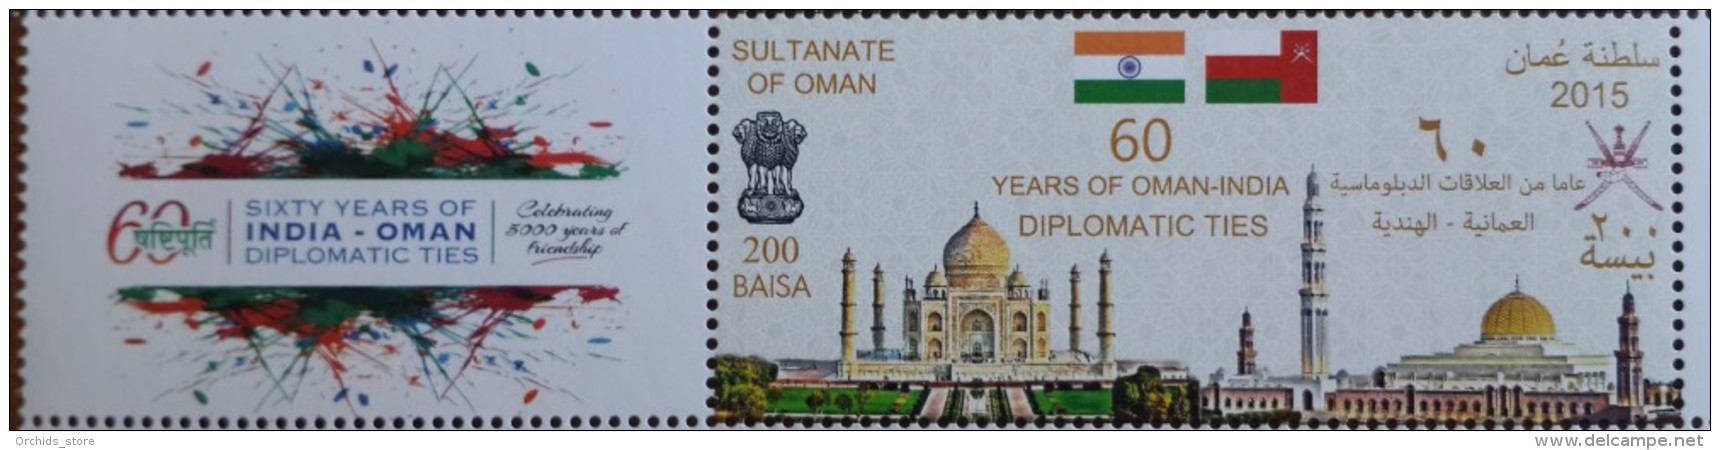 Sultanate Of Oman 2016 MNH Stamp - 60 Years Of Oman & India Diplomatic Ties - Oman